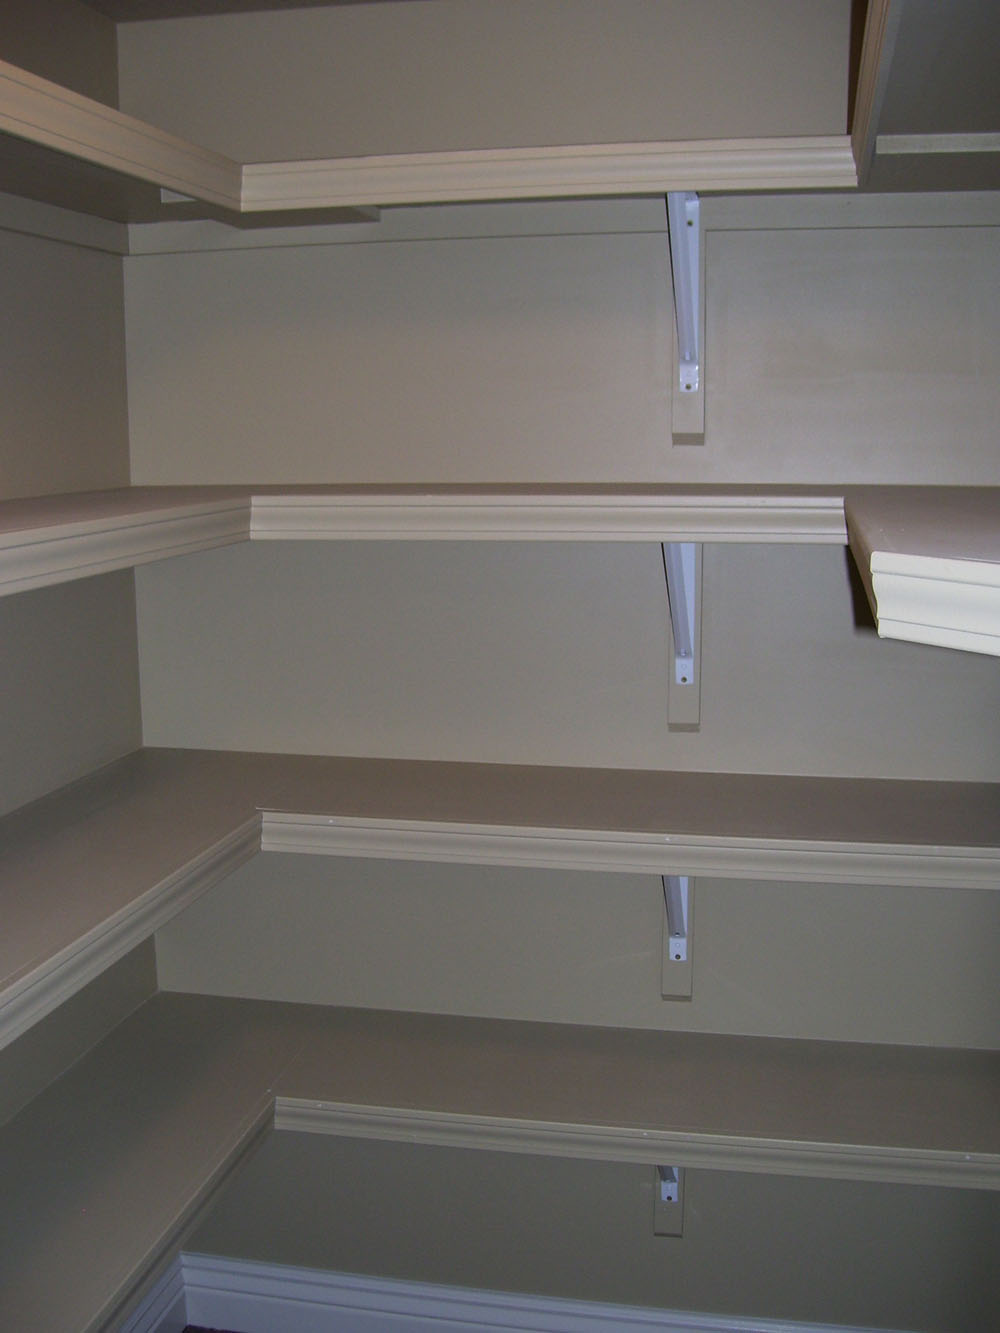 Pantry shelves